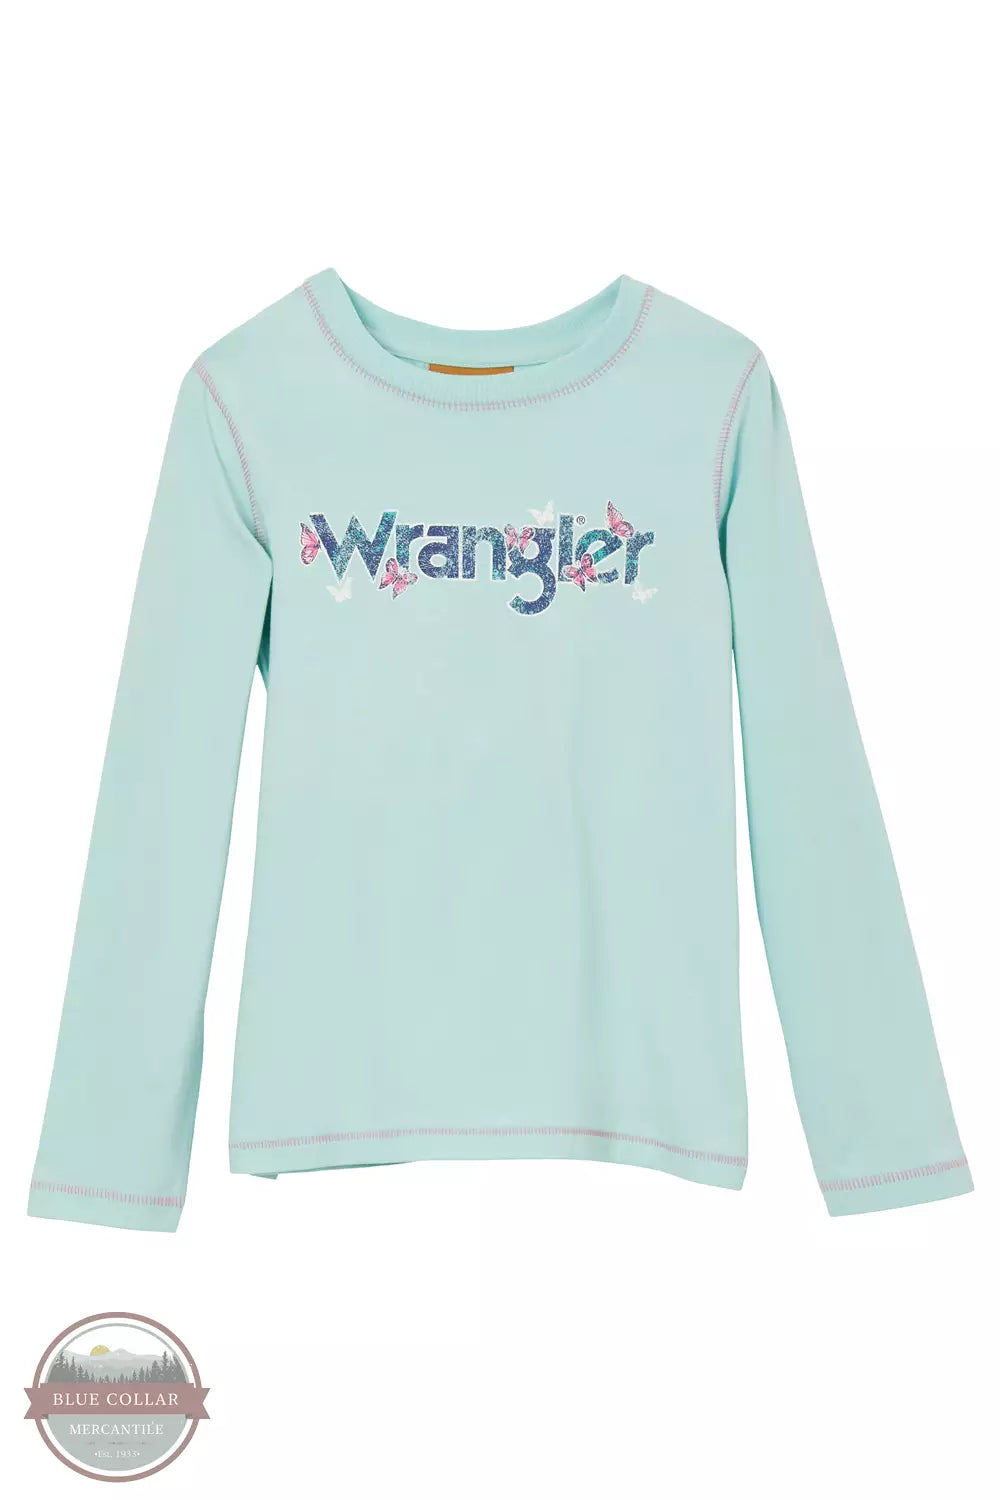 Wrangler 112344170 Butterfly Logo Long Sleeve T-Shirt in Light Blue Front View